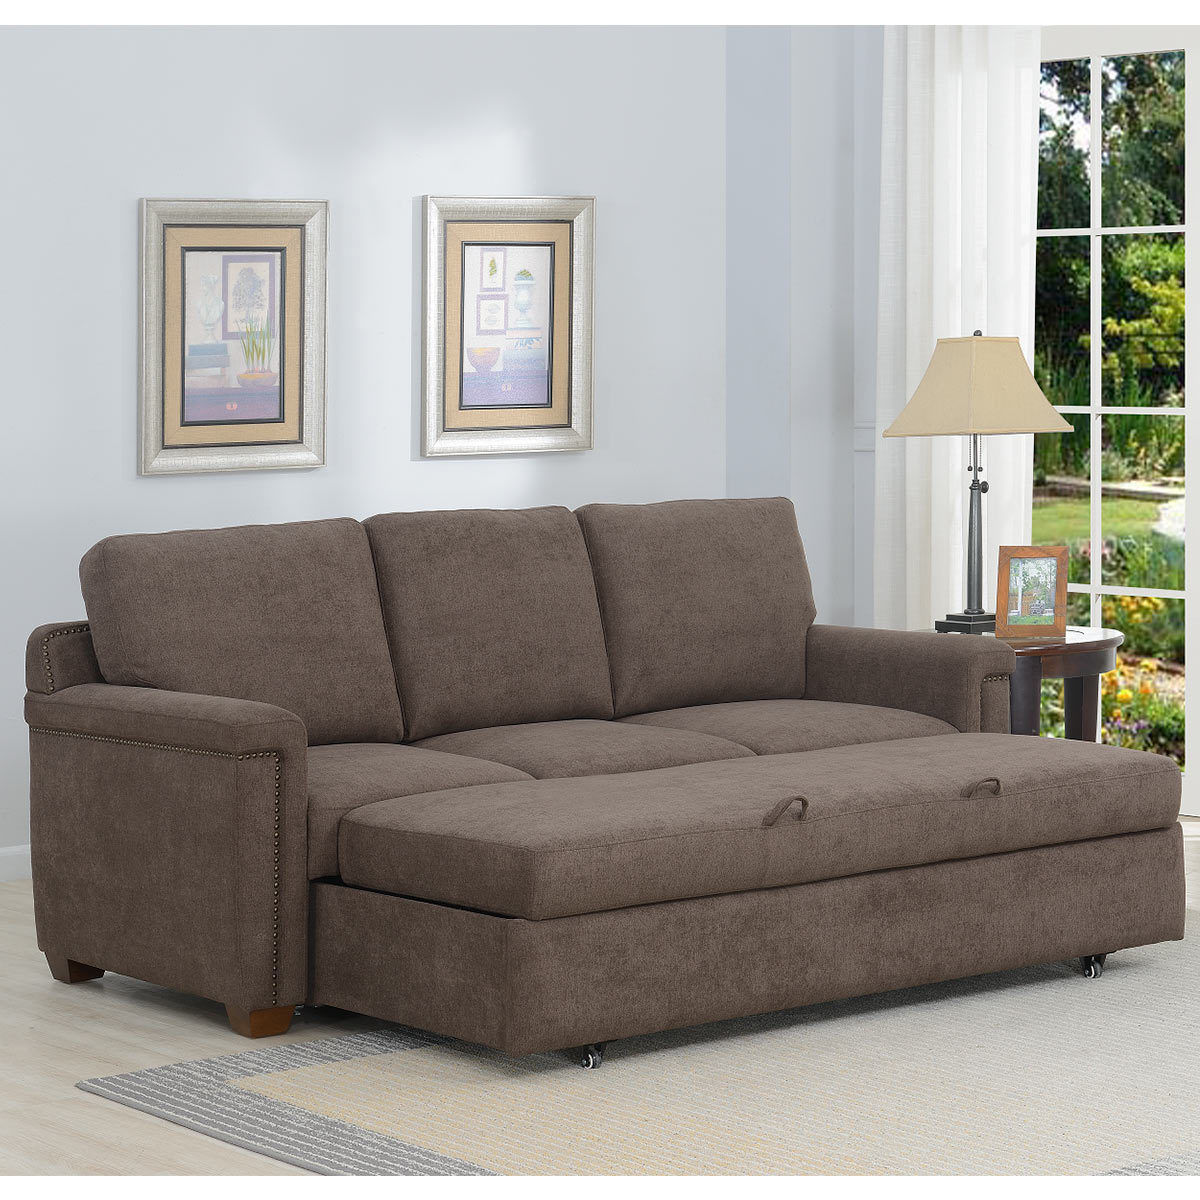 Mstar Arlene 3 Seater Brown Fabric Convertible Sofa Bed Costco UK